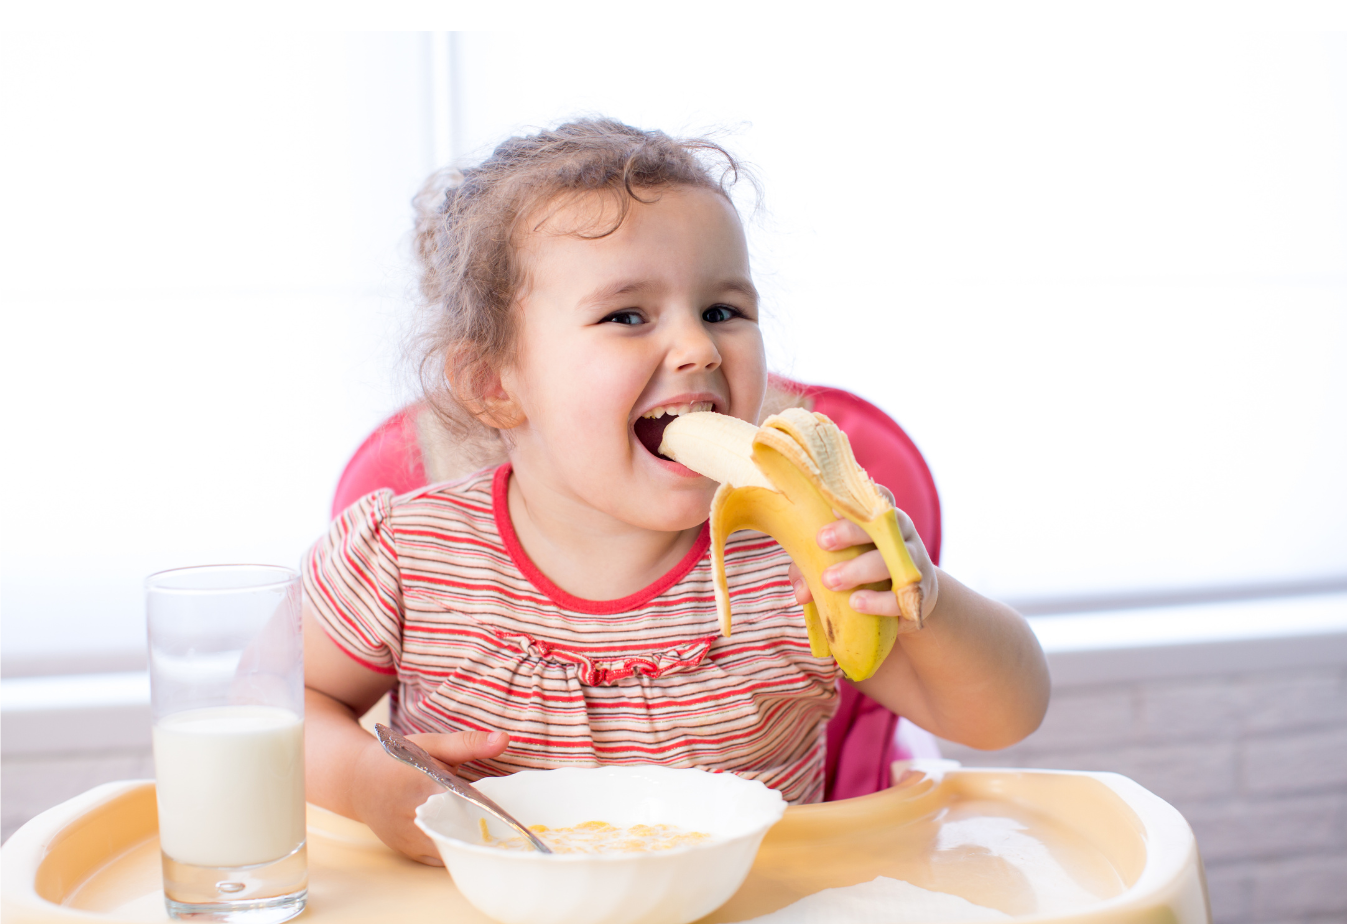 stock photo of young girl eating a banana